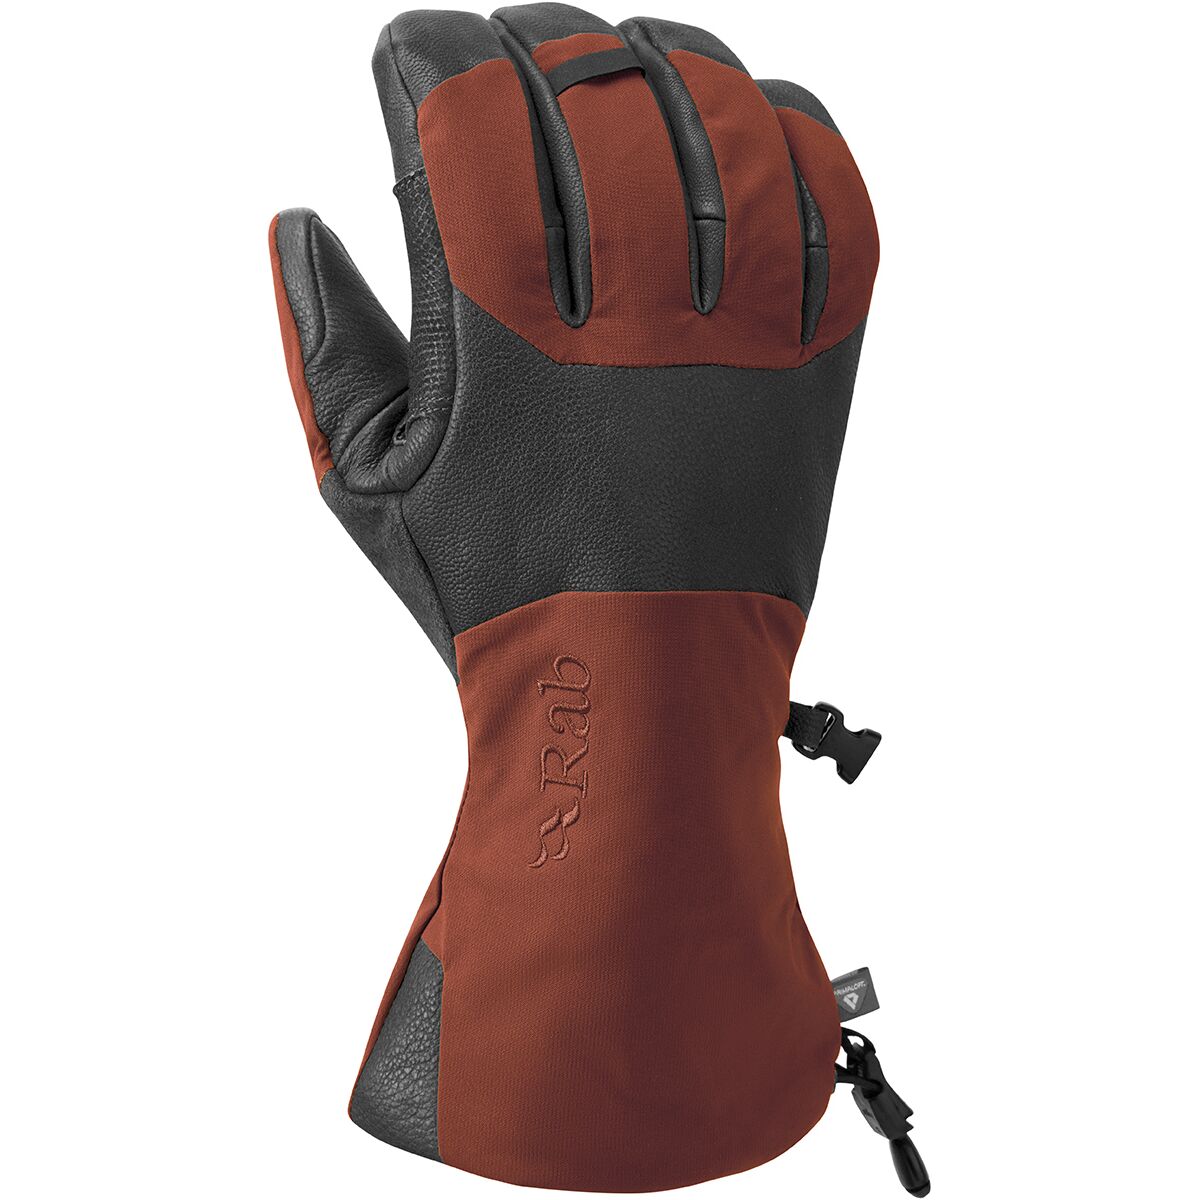 Rab Guide 2 GTX Glove - Men's Dark Clay